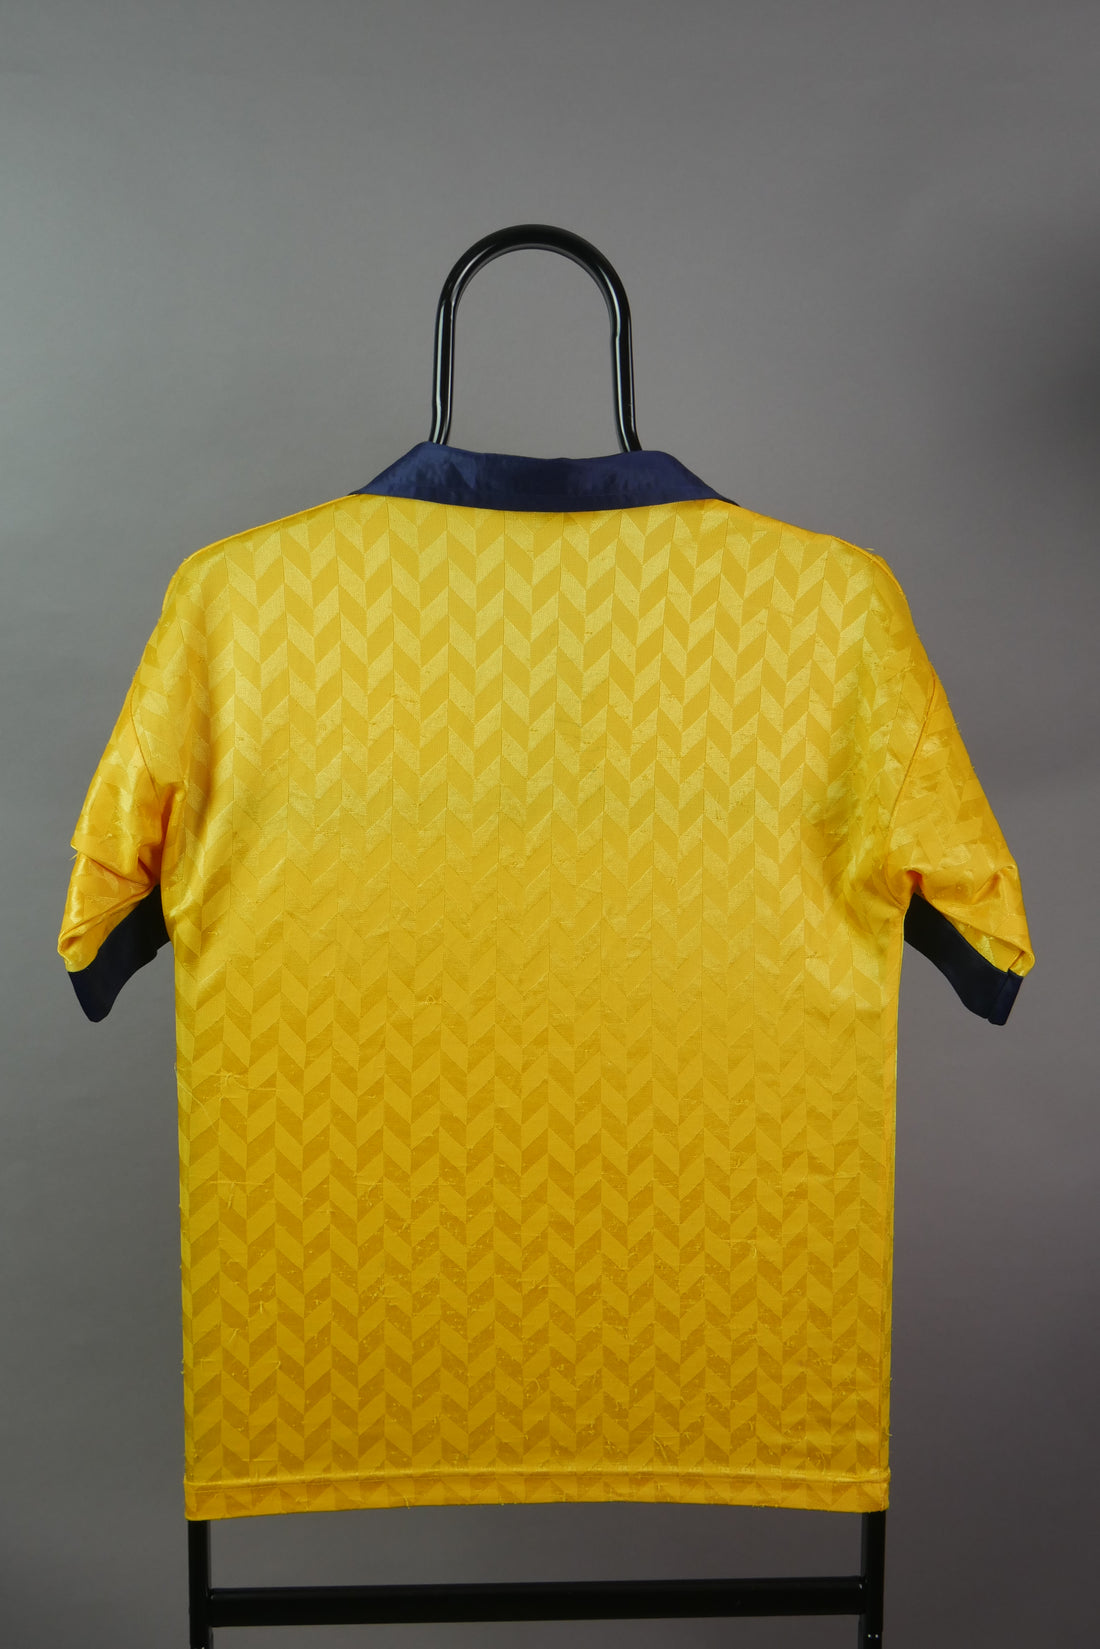 The Bolton Reebok Football Shirt (XS)